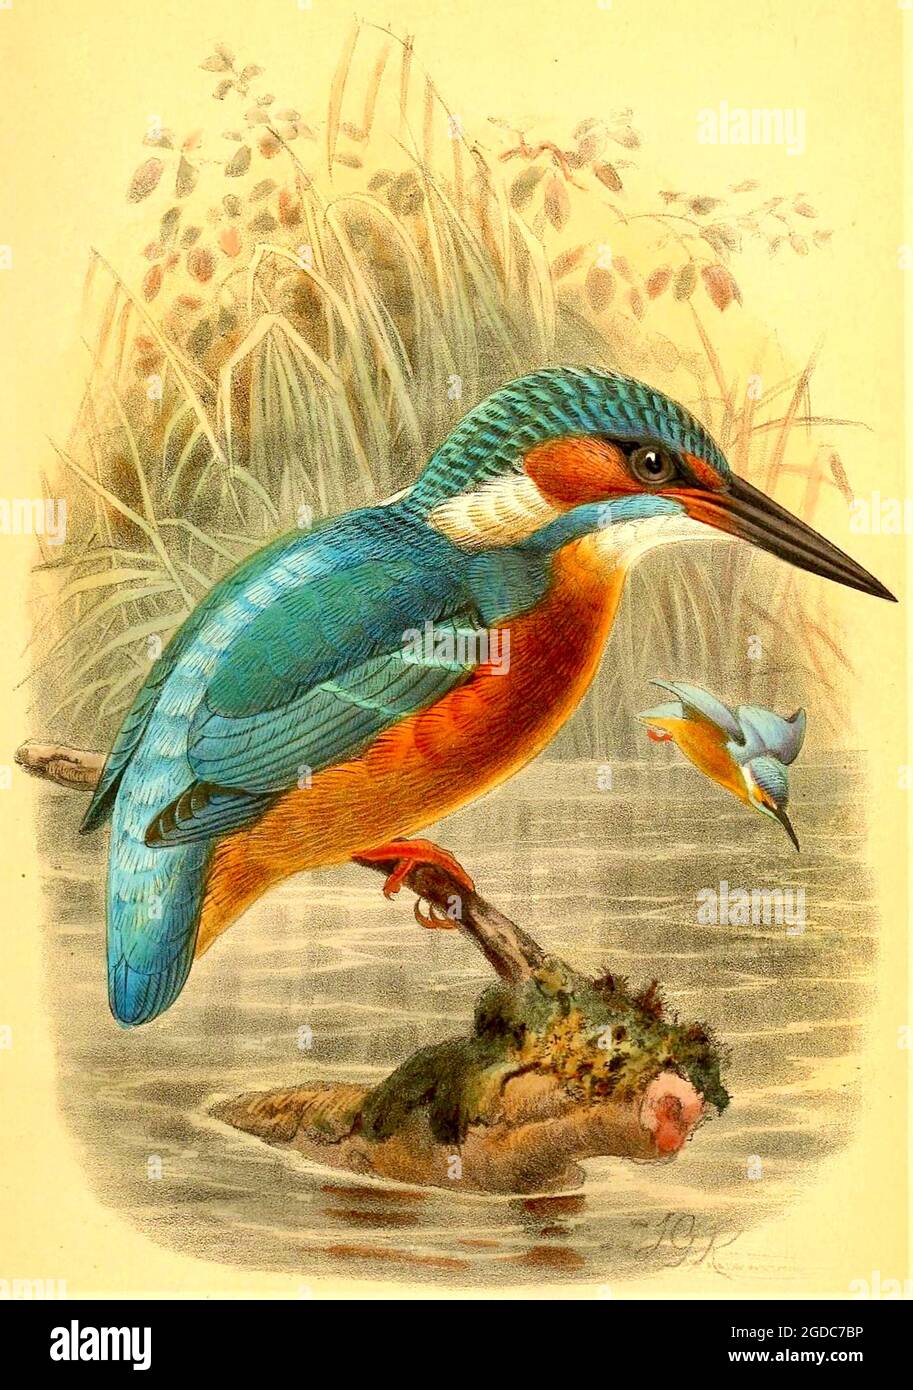 John Gerrard Keulemans (Johannes Gerardus Keulemans) - Vintage British bird illustration - Common Kingfisher - Alcedo ispida Stock Photo